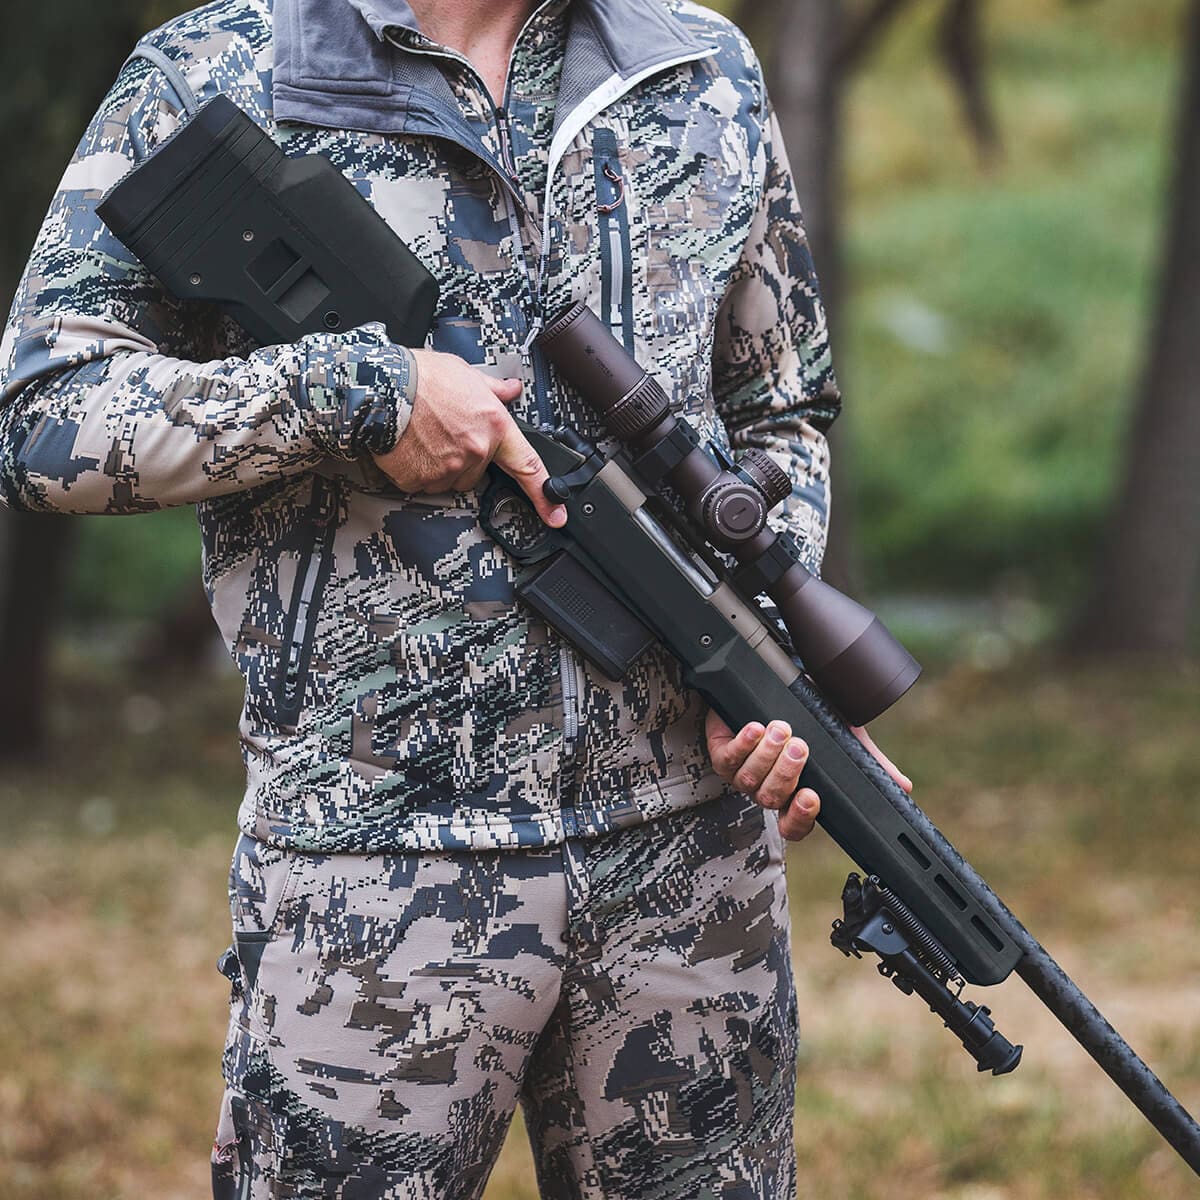 Osada Magpul Hunter 700L Stock do karabinu Remington 700 Long Action - Black